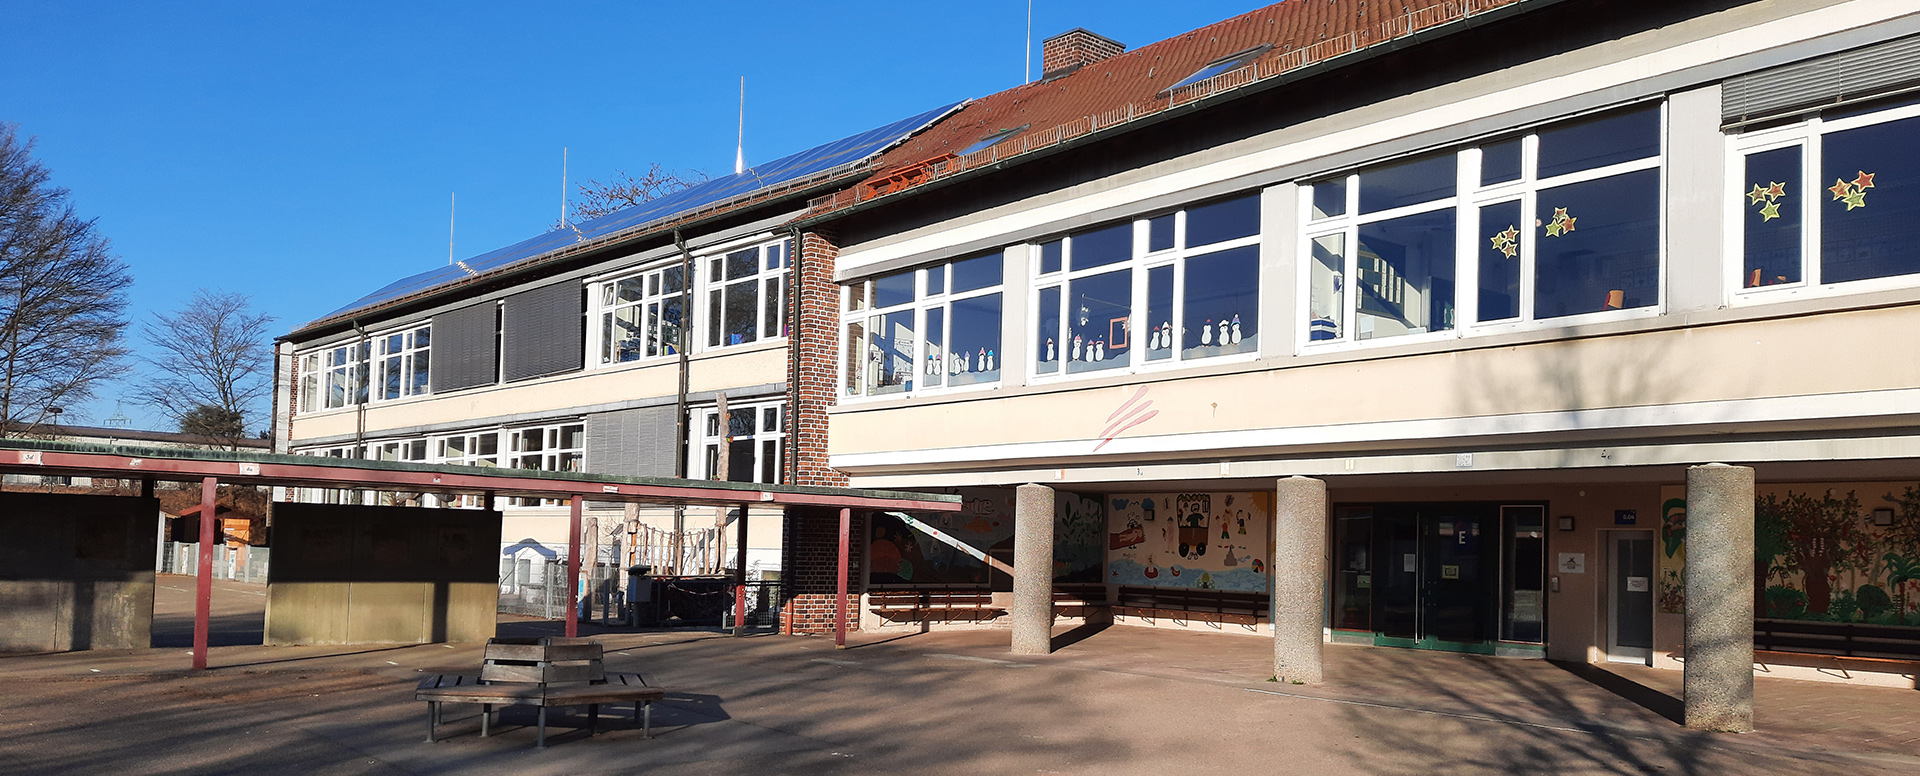 Grundschule Haldenschule Rommelshausen - Sliderbild 3